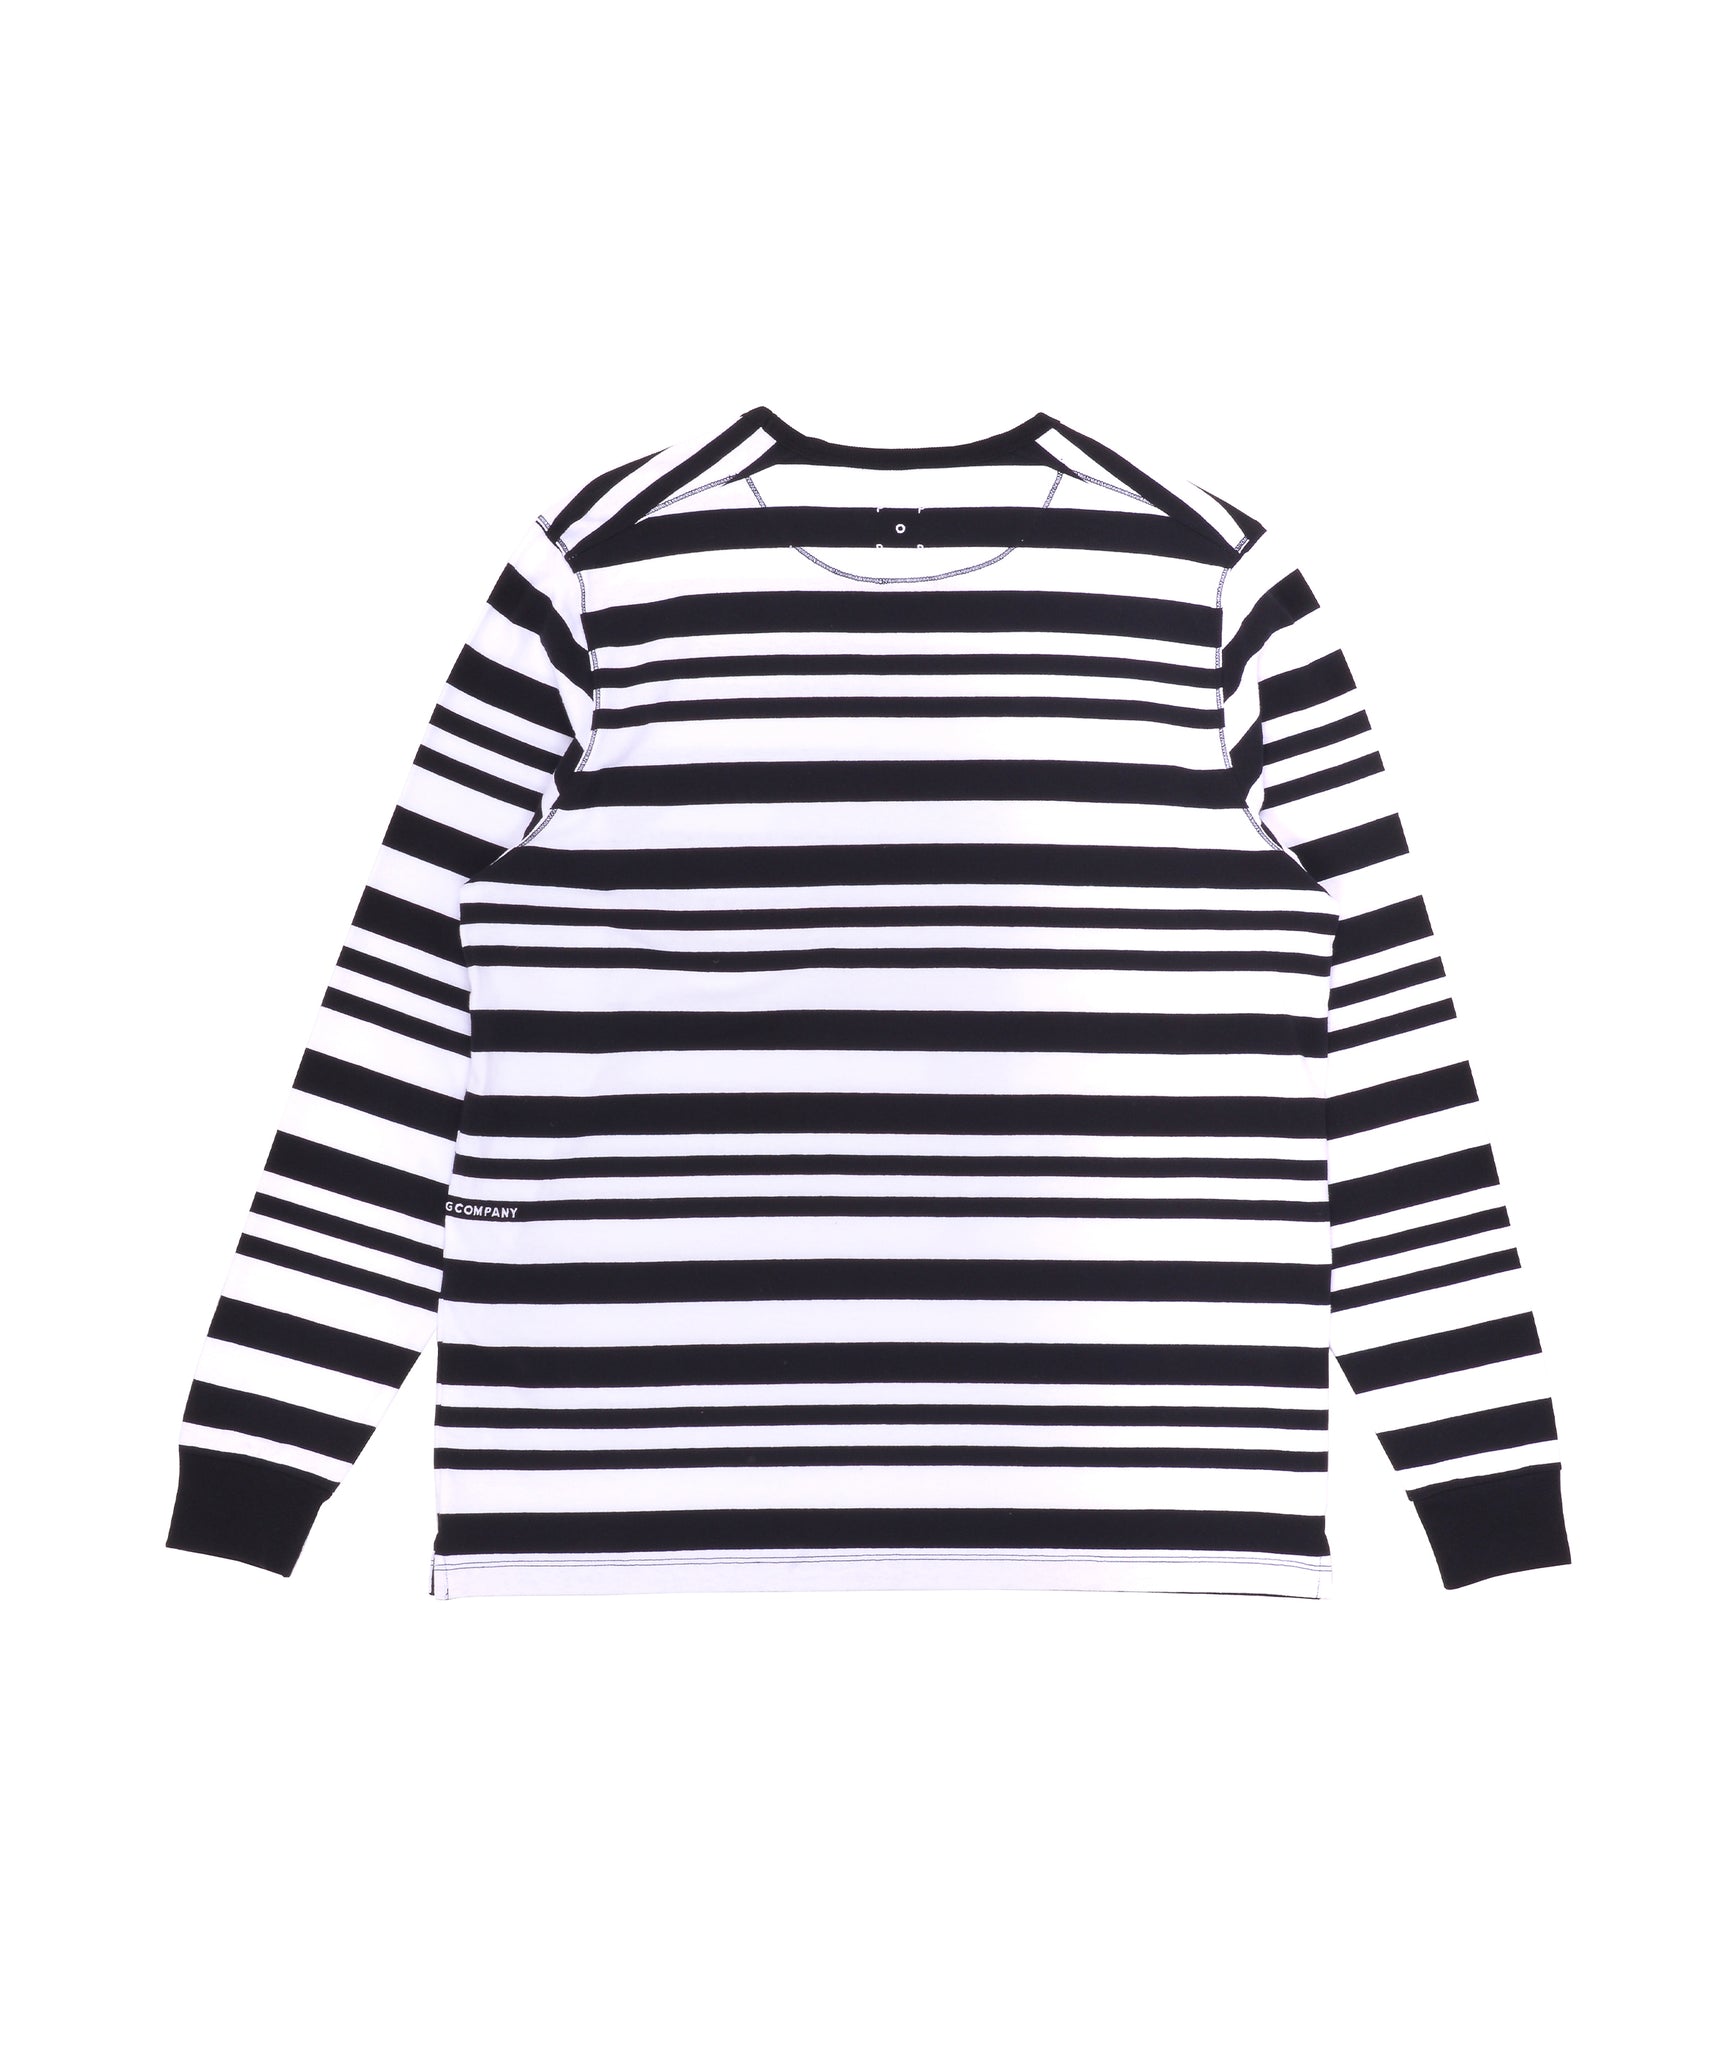 Big P Striped Longsleeve T-Shirt - Black/White